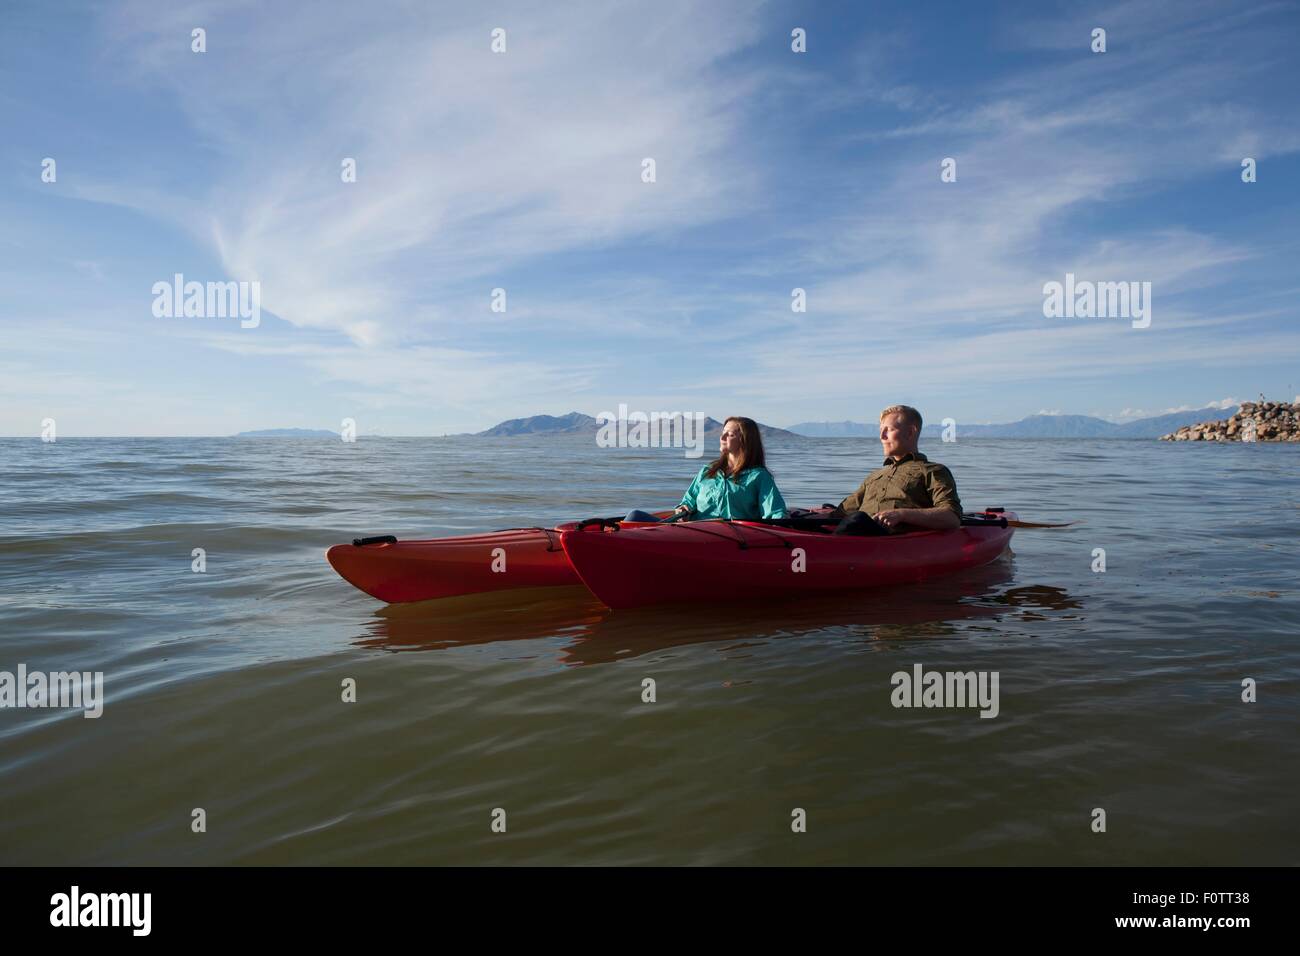 Young couple in kayaks on water, eyes closed looking away, Great Salt Lake, Utah, USA Stock Photo